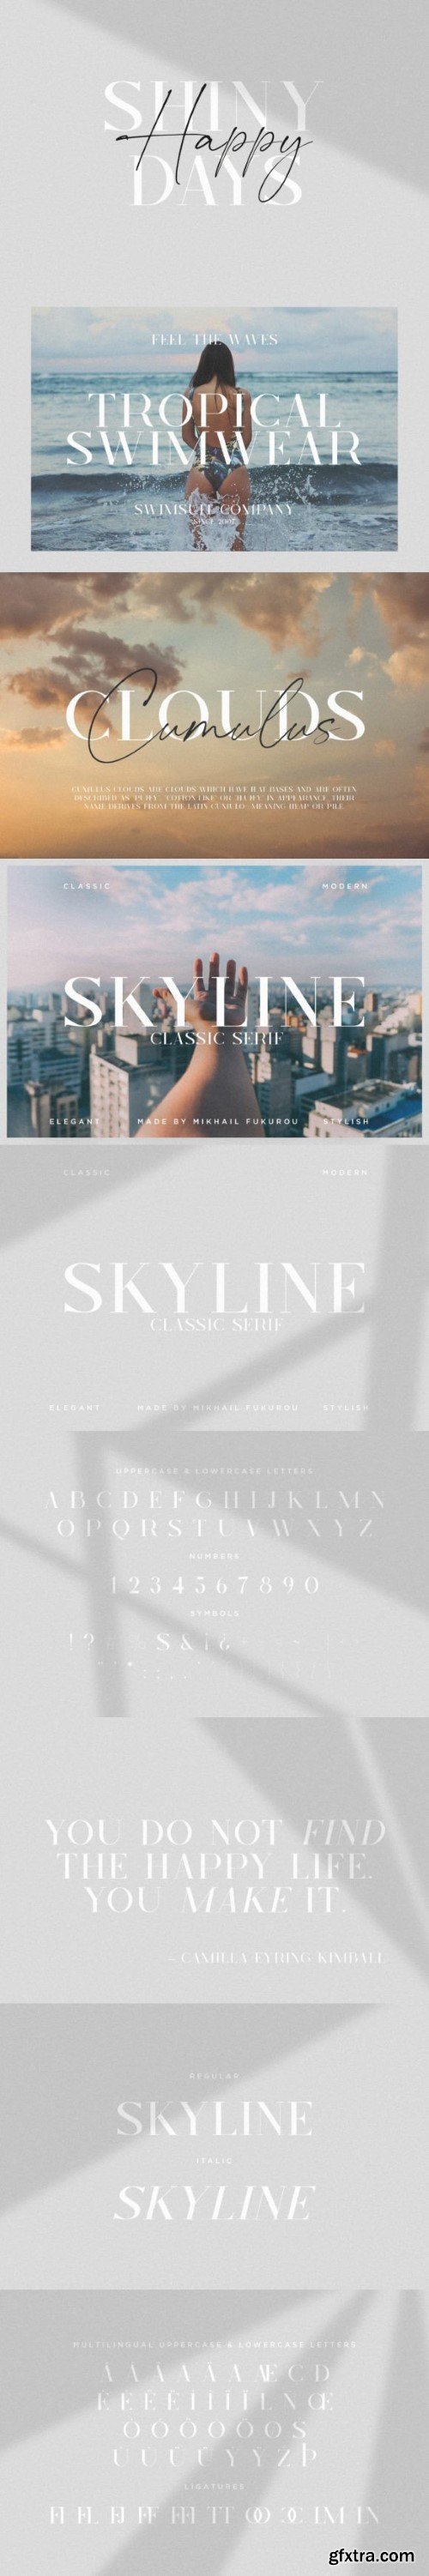 Skyline serif font